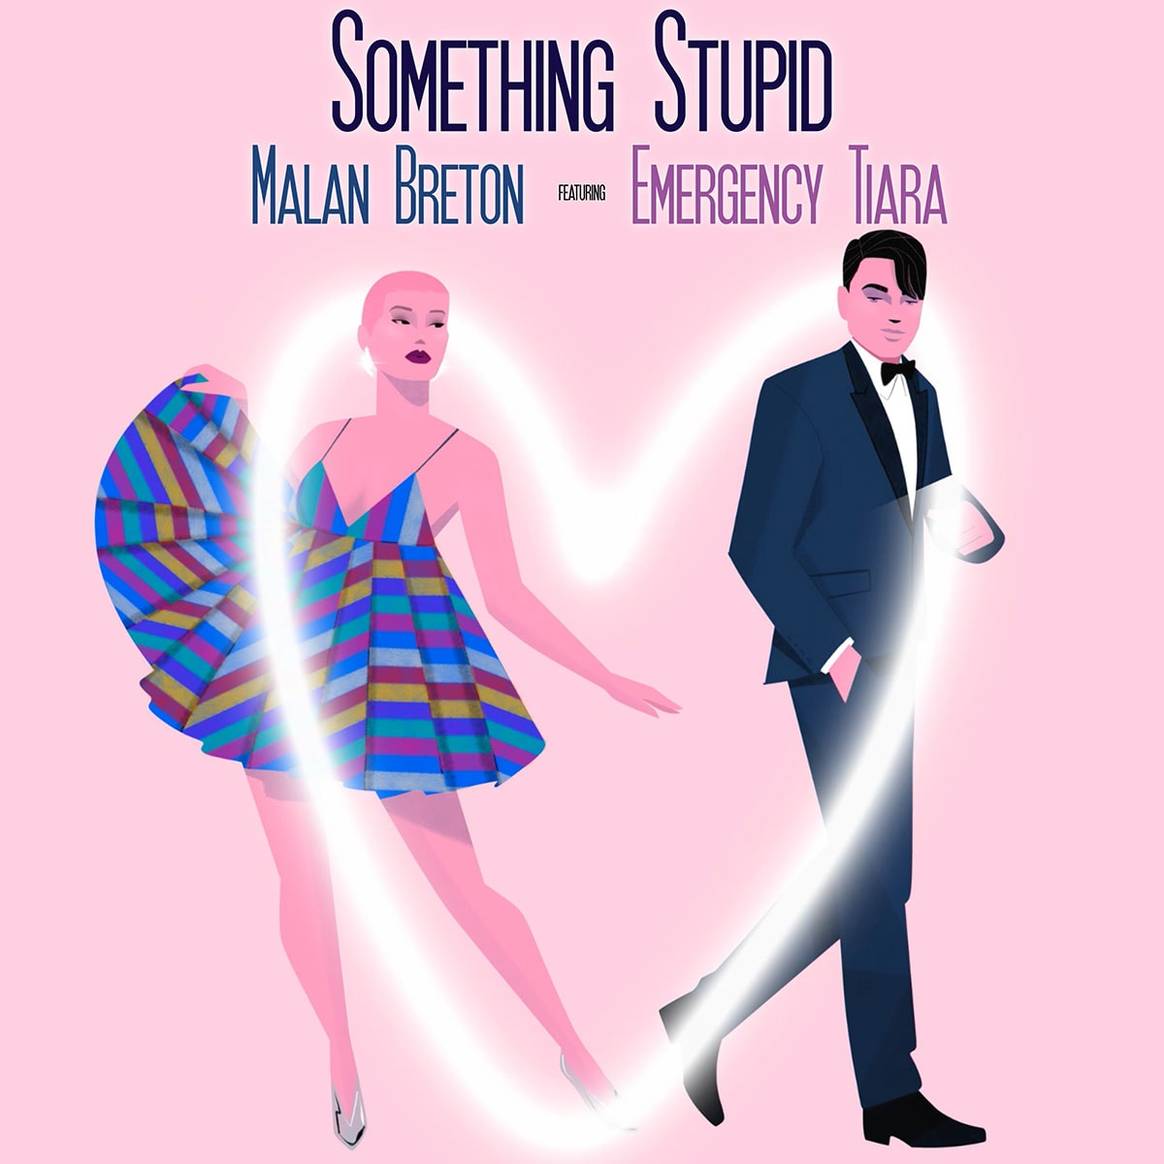 Malan Breton launches debut music single